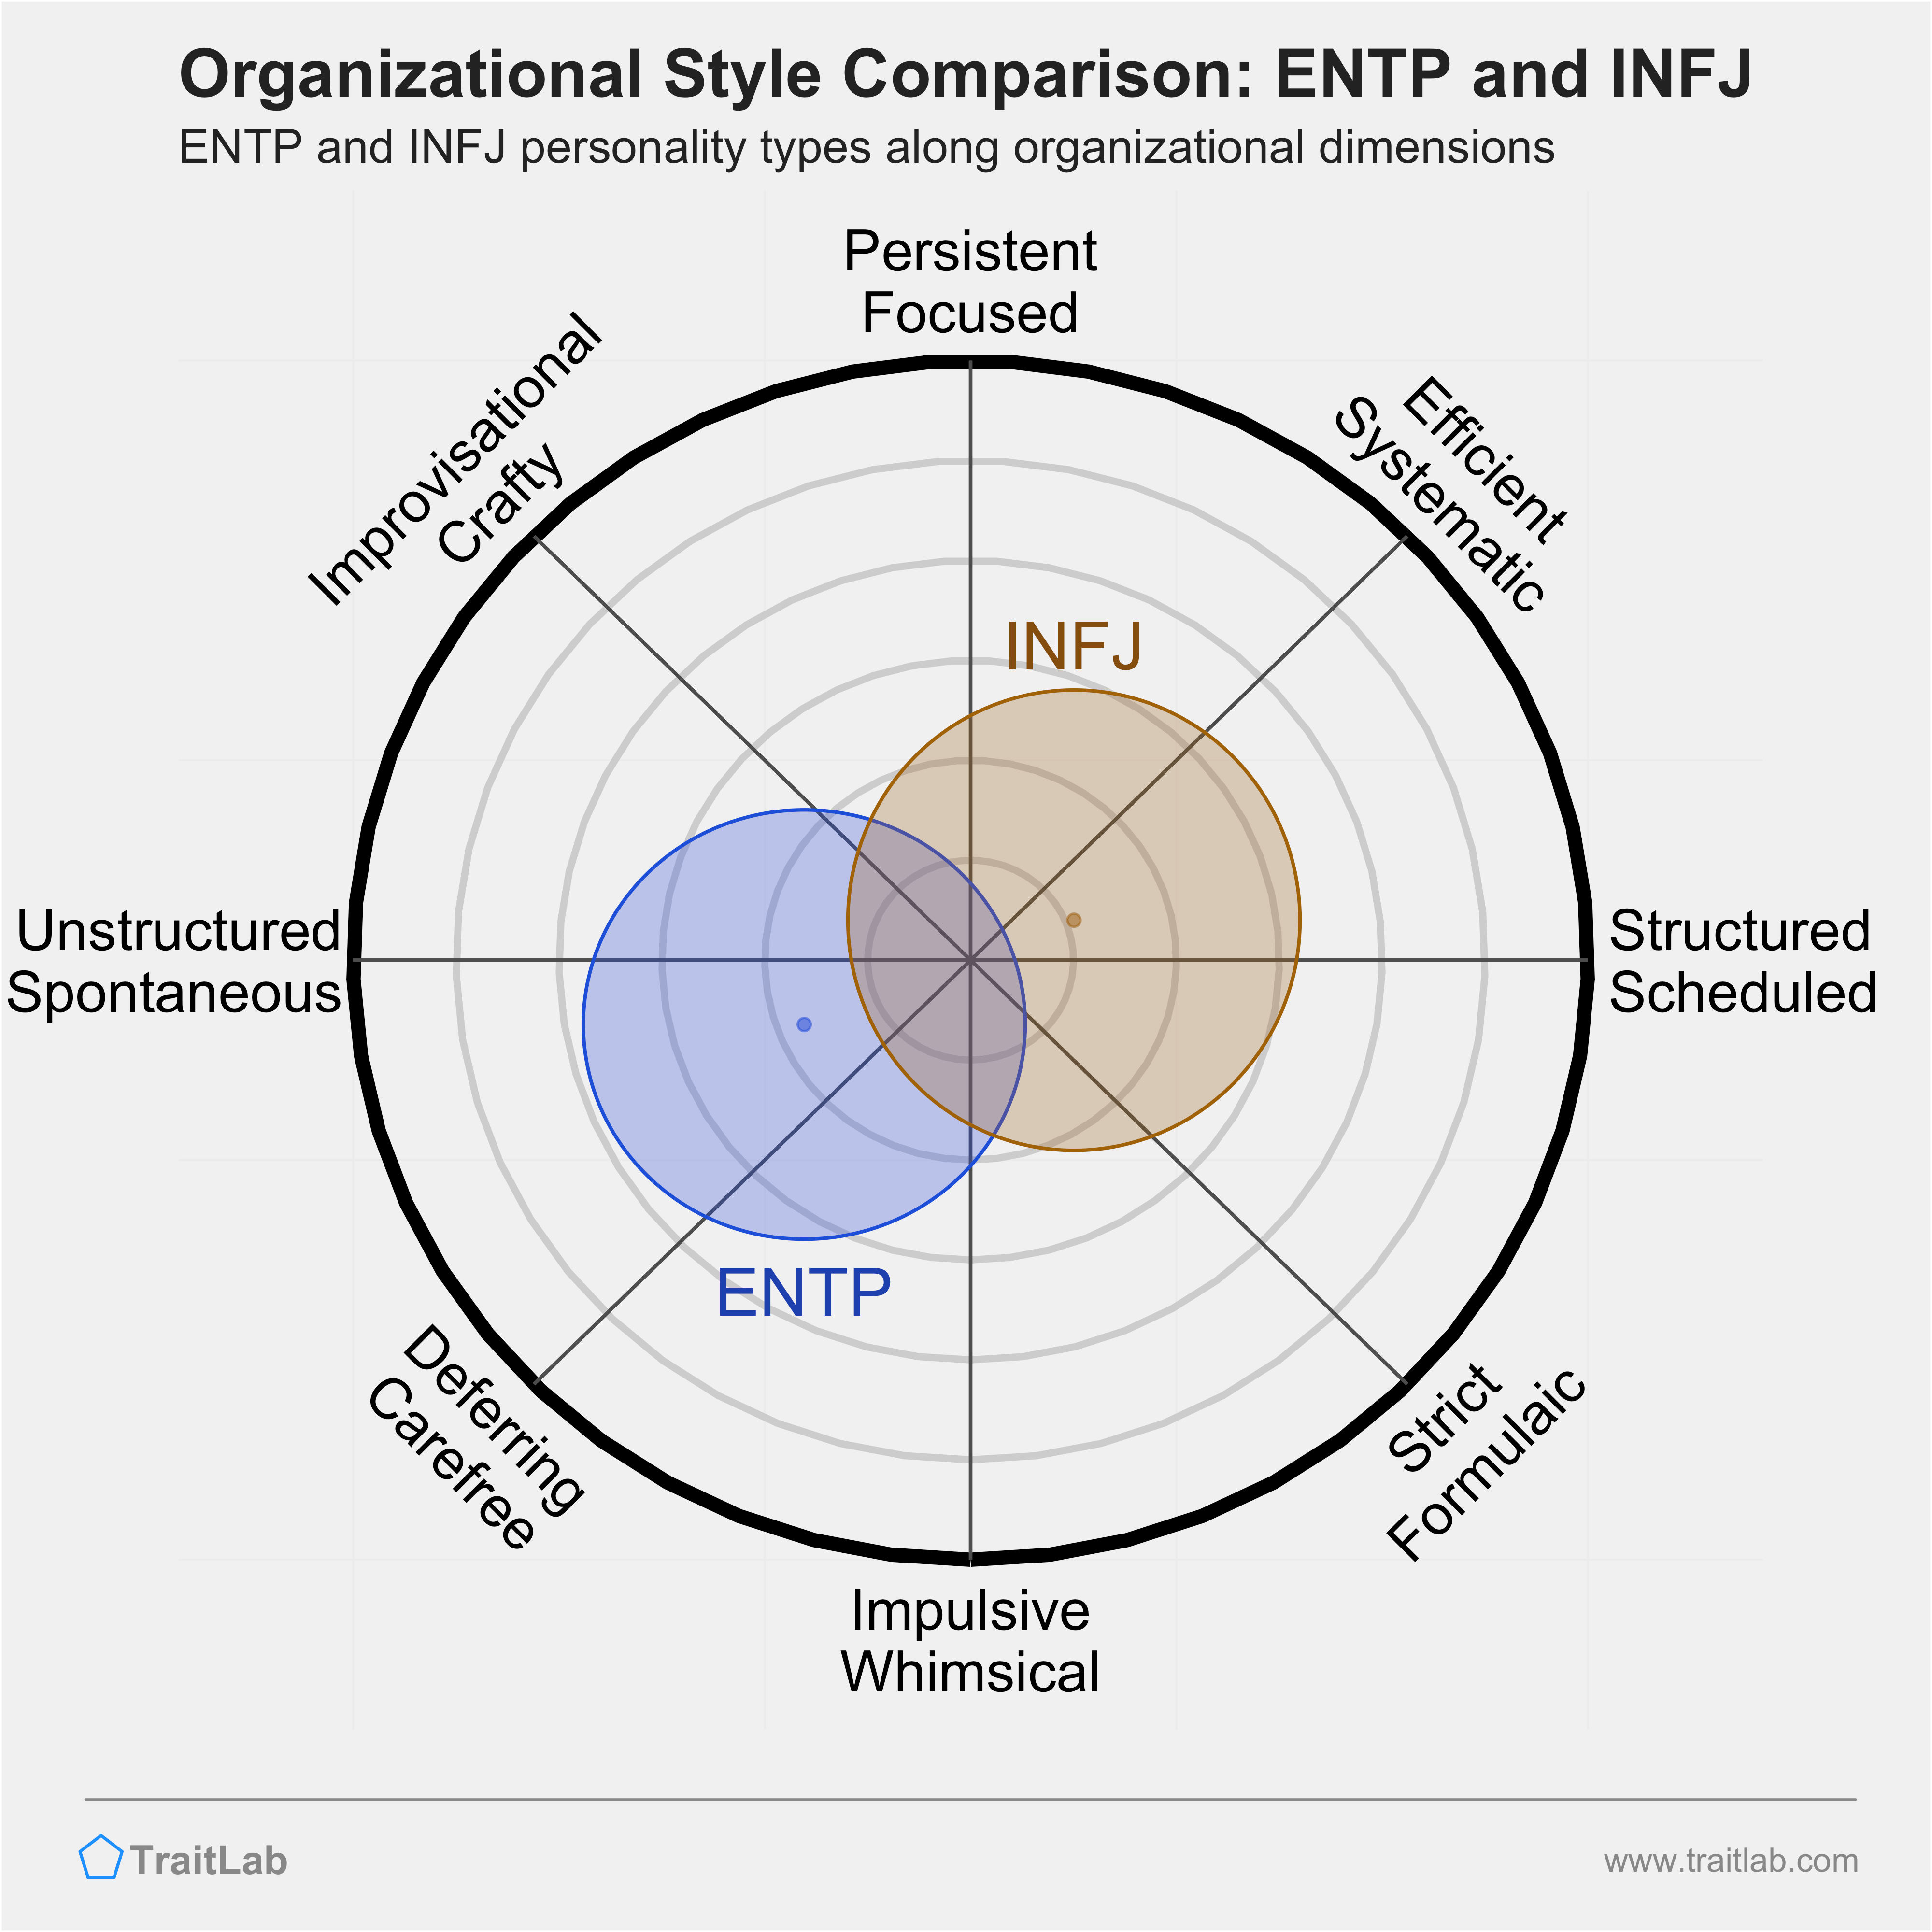 ENTP and INFJ comparison across organizational dimensions